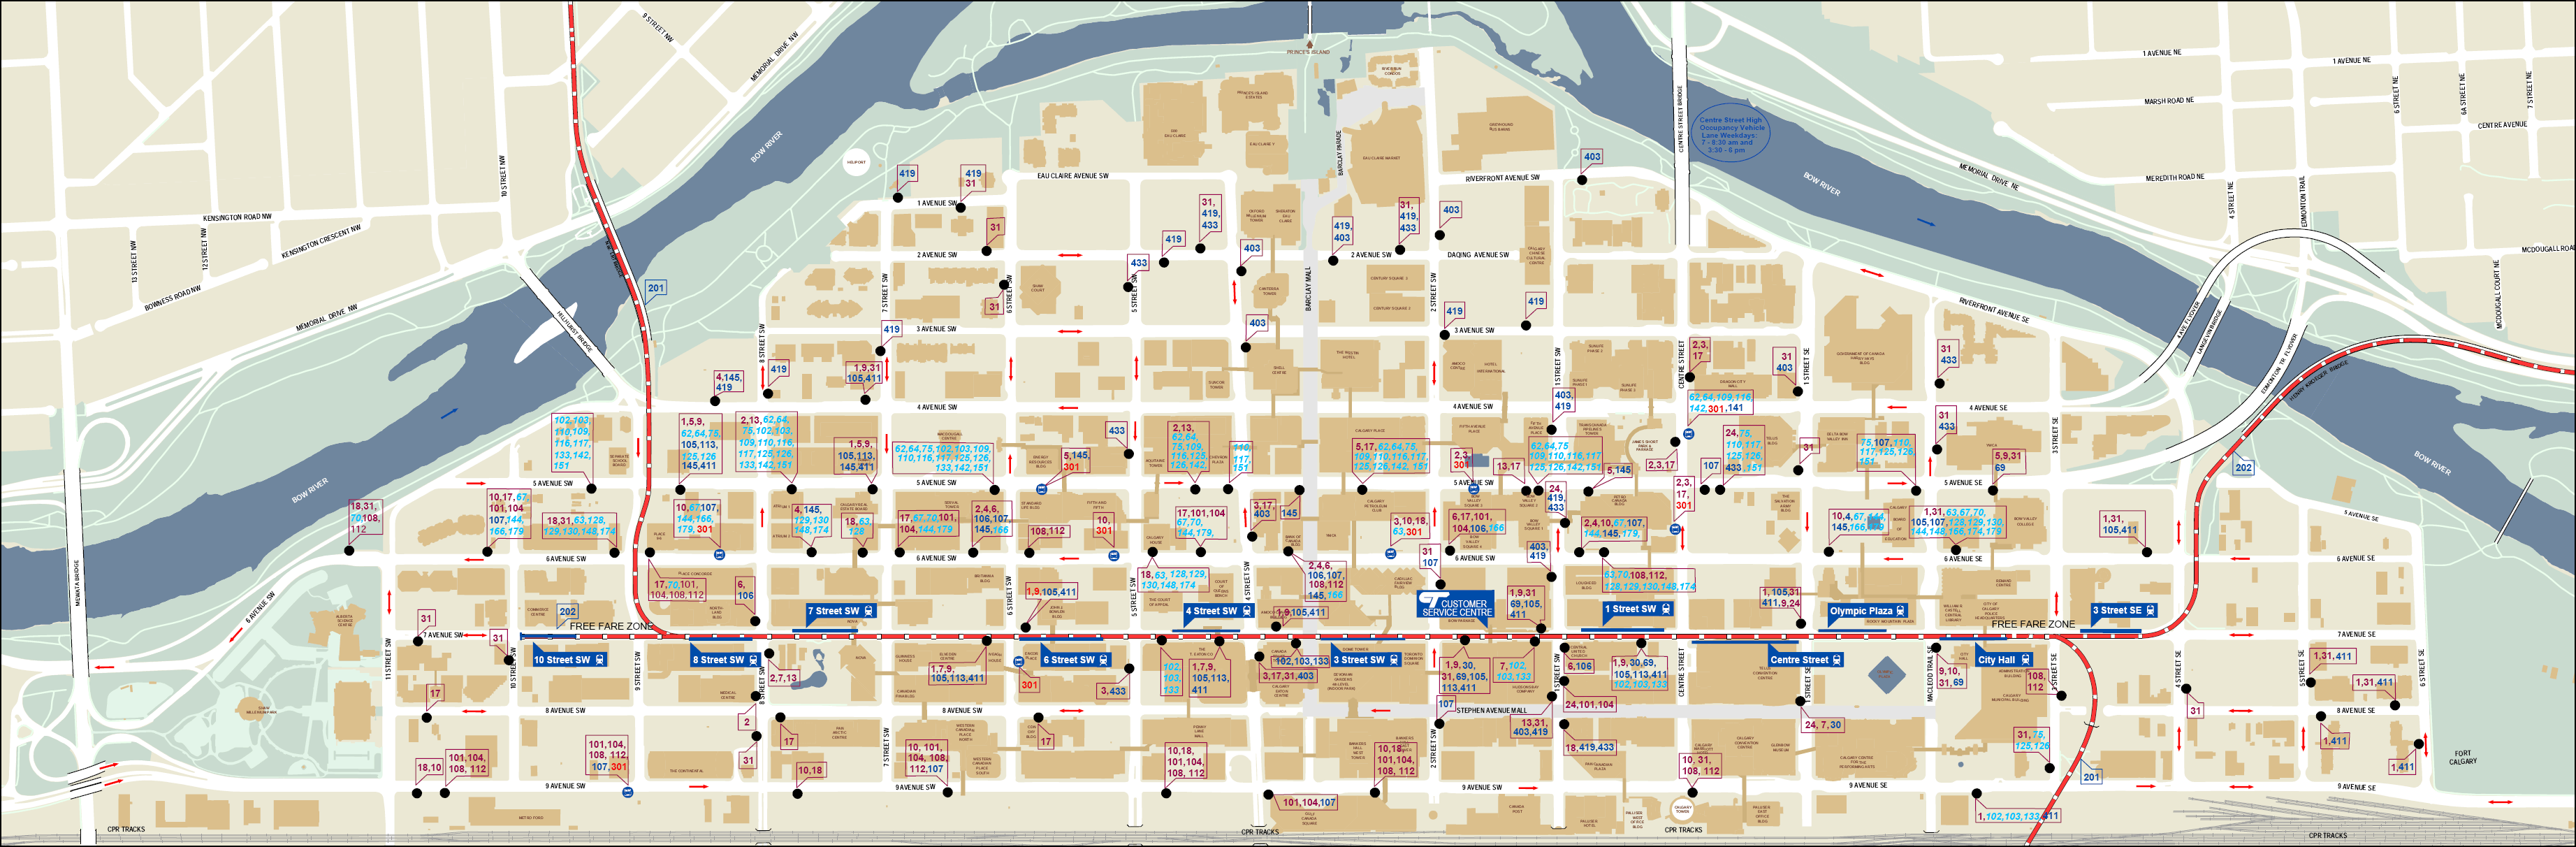 Metro map of Calgary